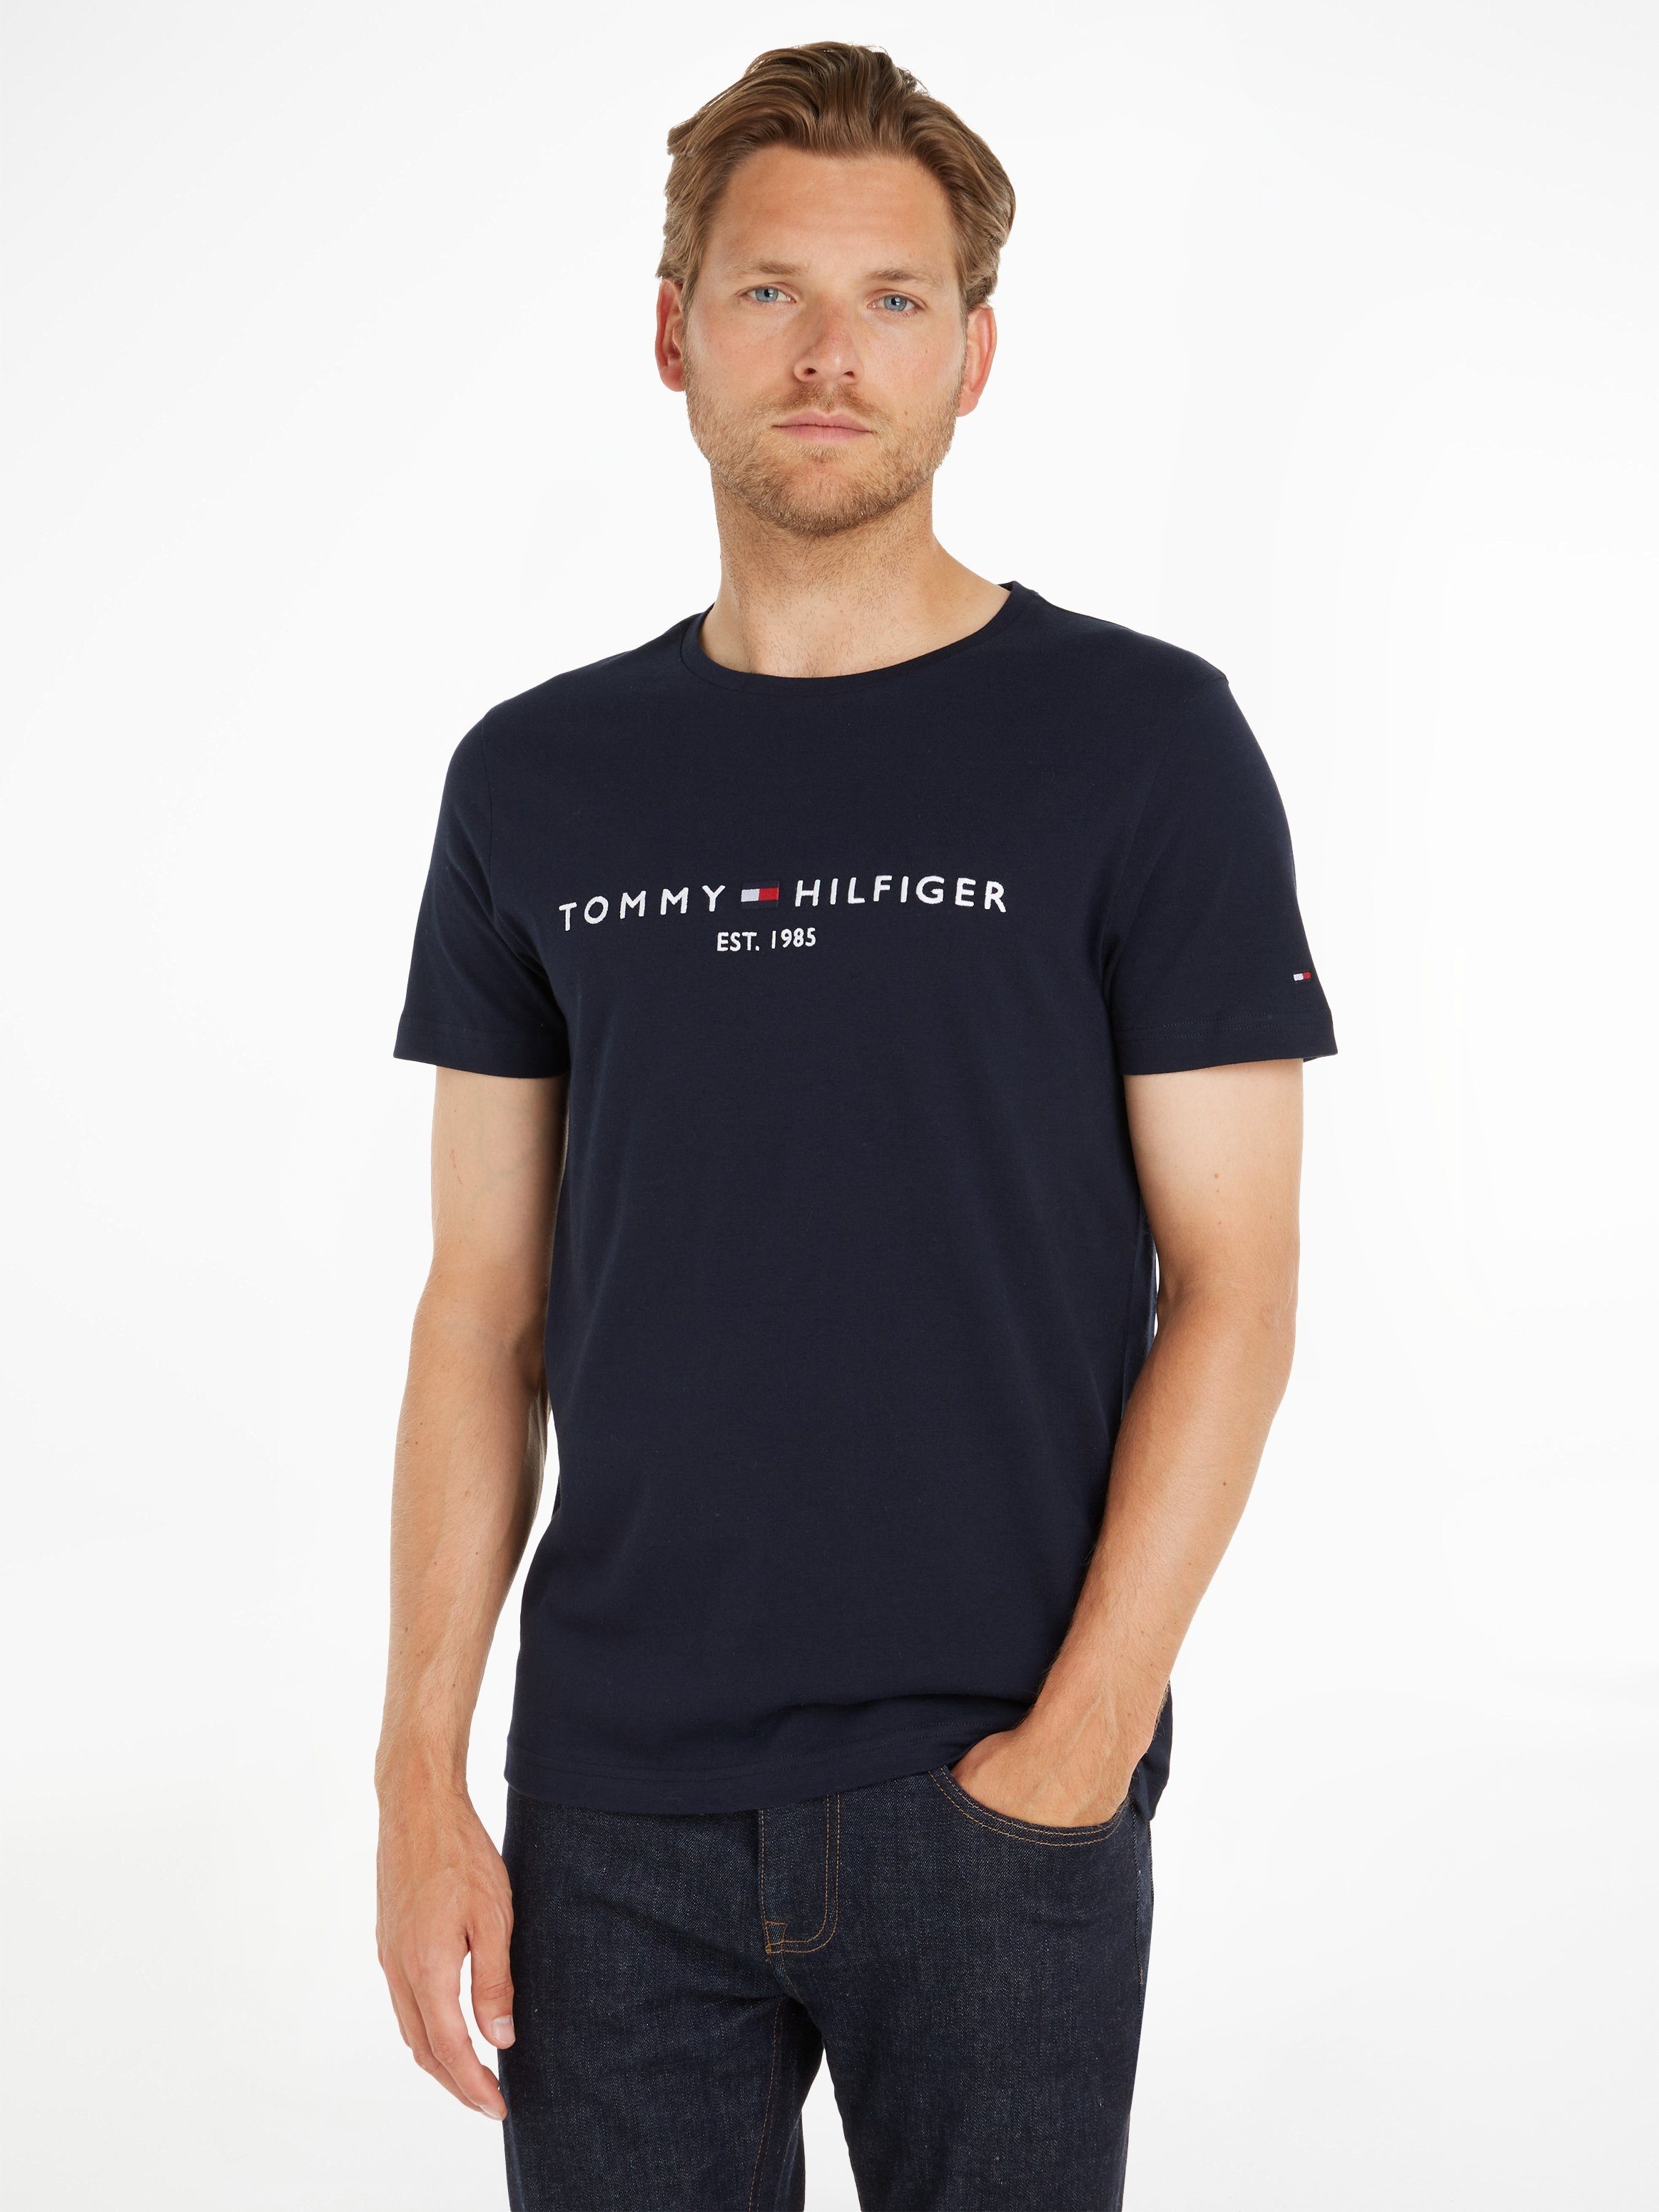 Tommy Hilfiger T-Shirt TOMMY FLAG HILFIGER TEE sky captain